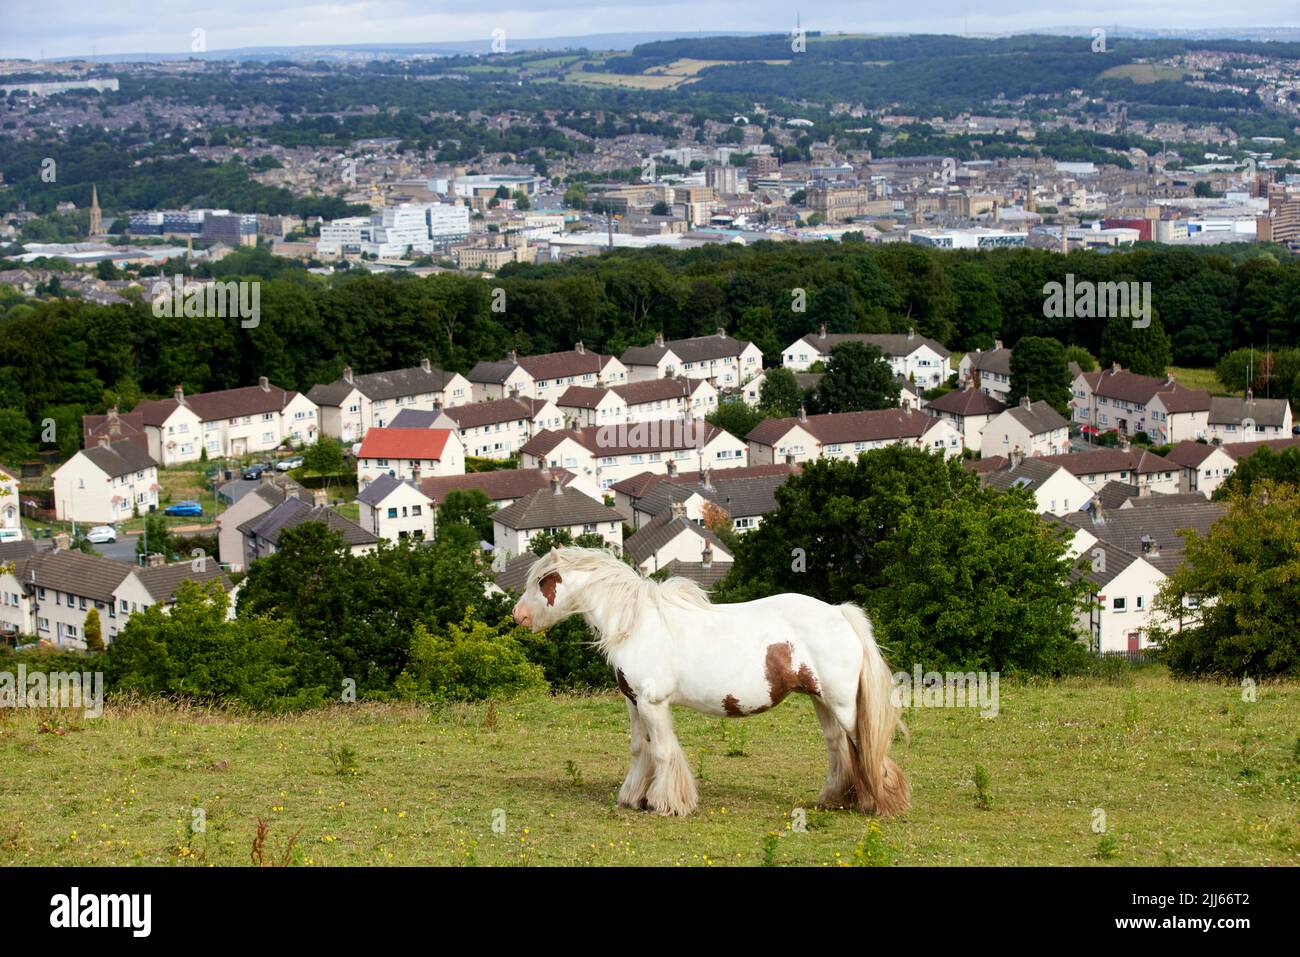 Pferd im Feld mit Huddersfield Wohnbestand dahinter Stockfoto